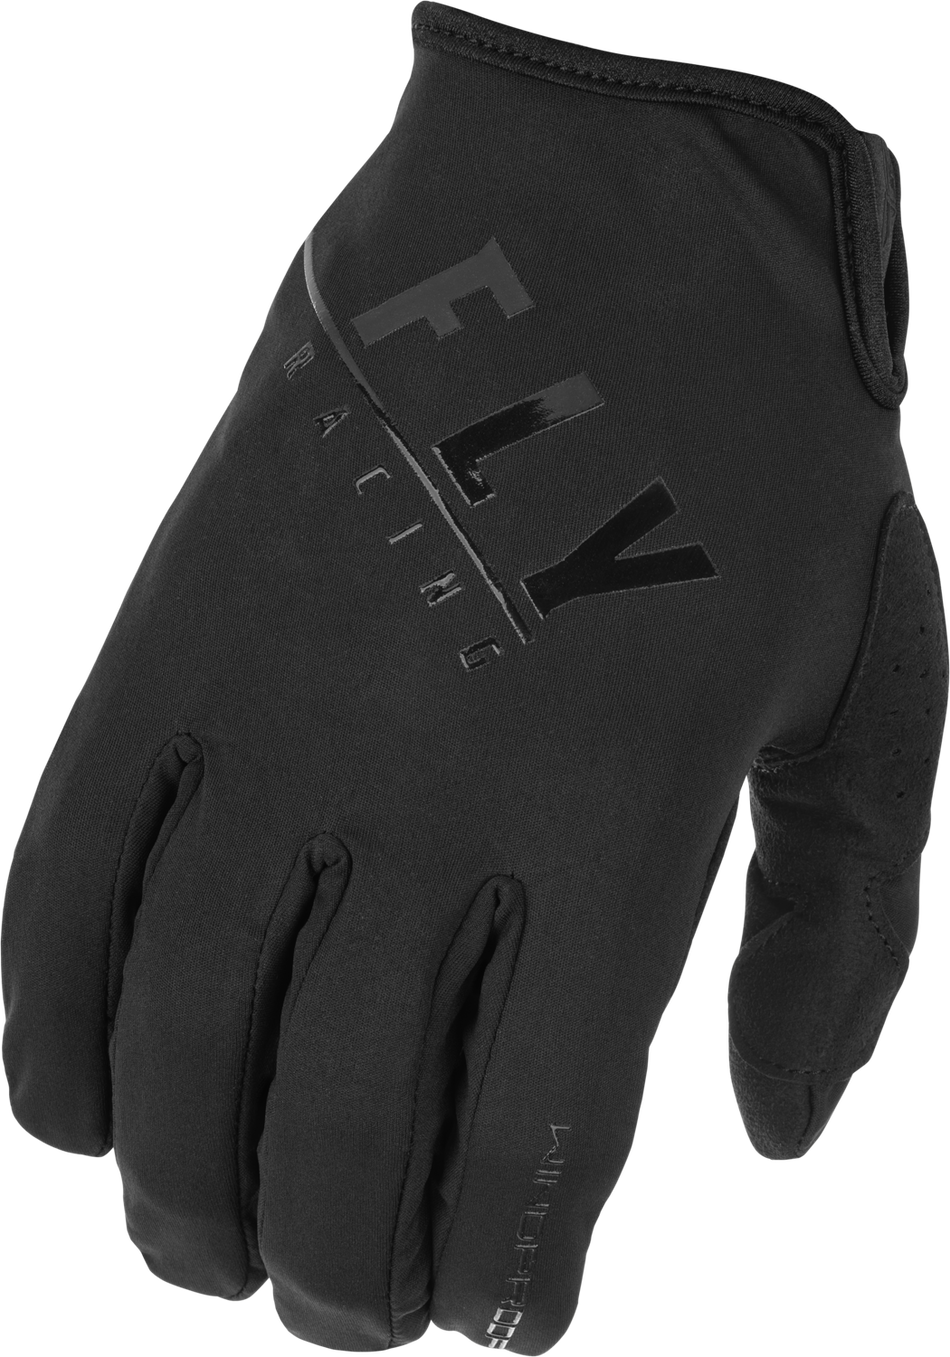 FLY RACING Windproof Gloves Black Sz 10 371-14110